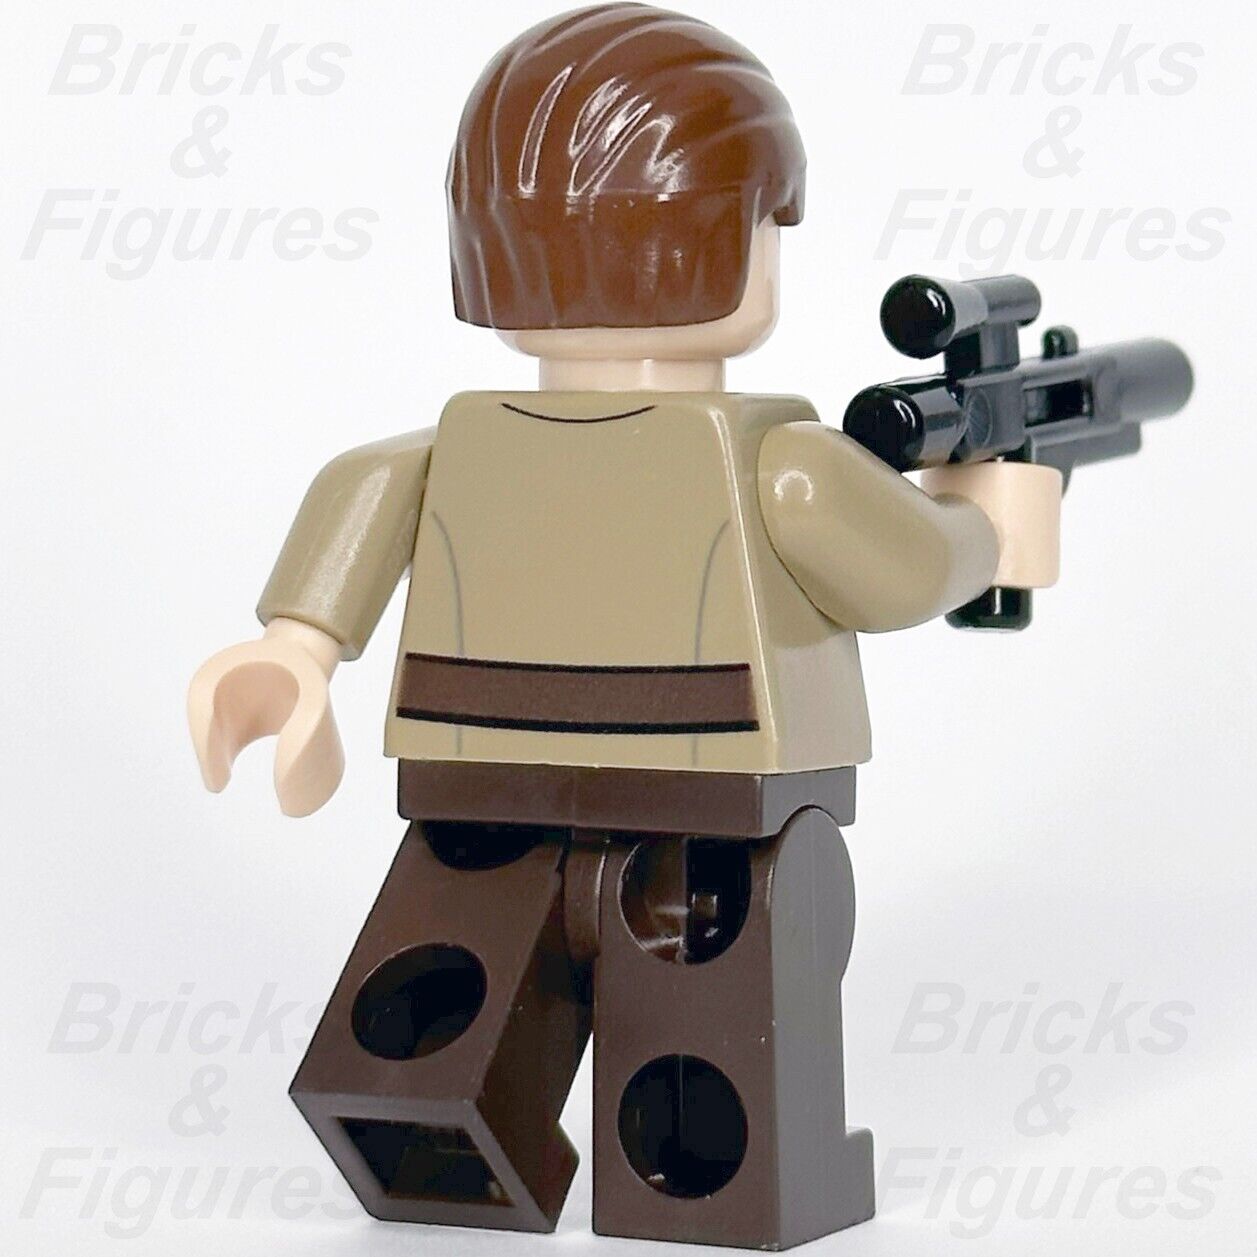 LEGO Star Wars Resistance Officer Minifigure Headset Print Pattern 75131 sw0699 - Bricks & Figures